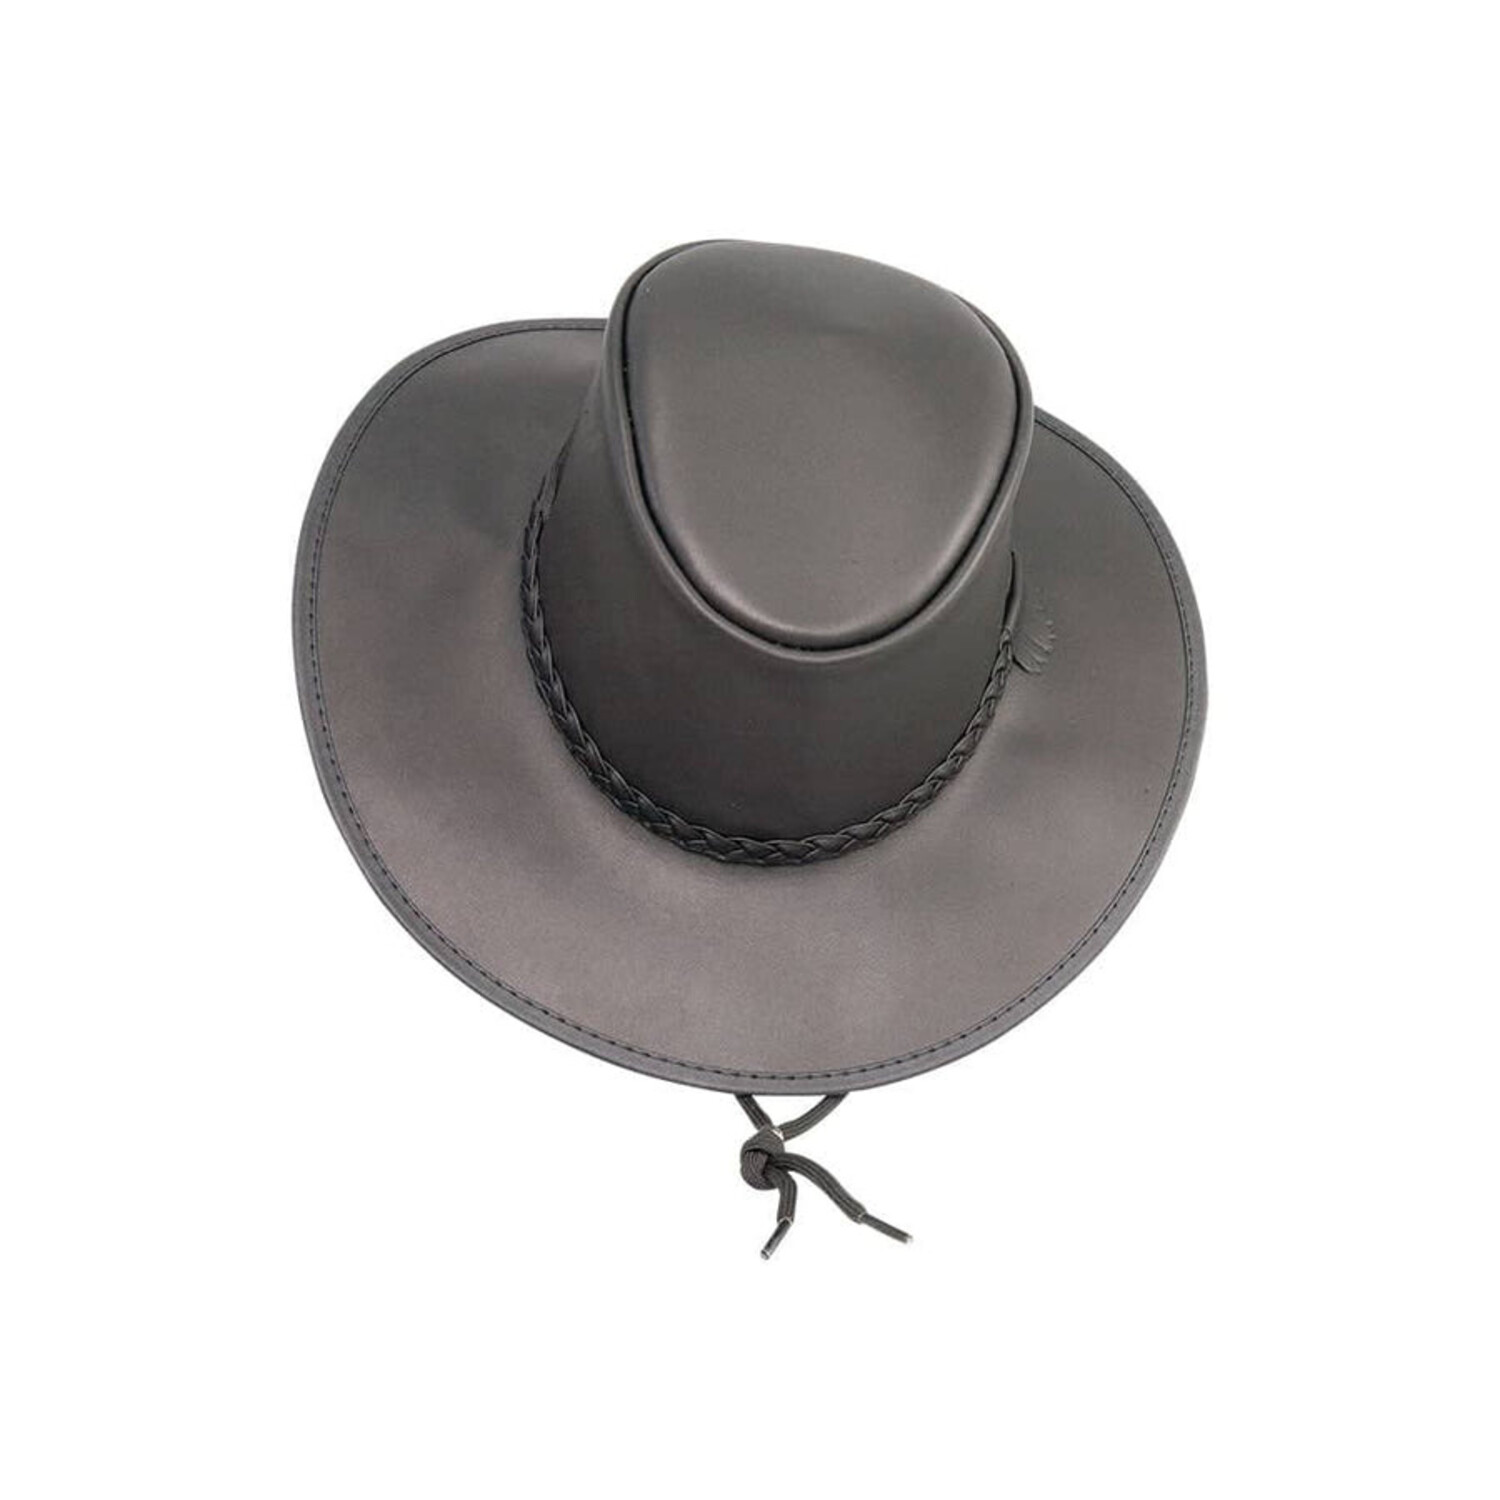 https://cdn.shoplightspeed.com/shops/632556/files/54754264/1500x4000x3/crusher-american-hat-crushable-leather-outback-hat.jpg